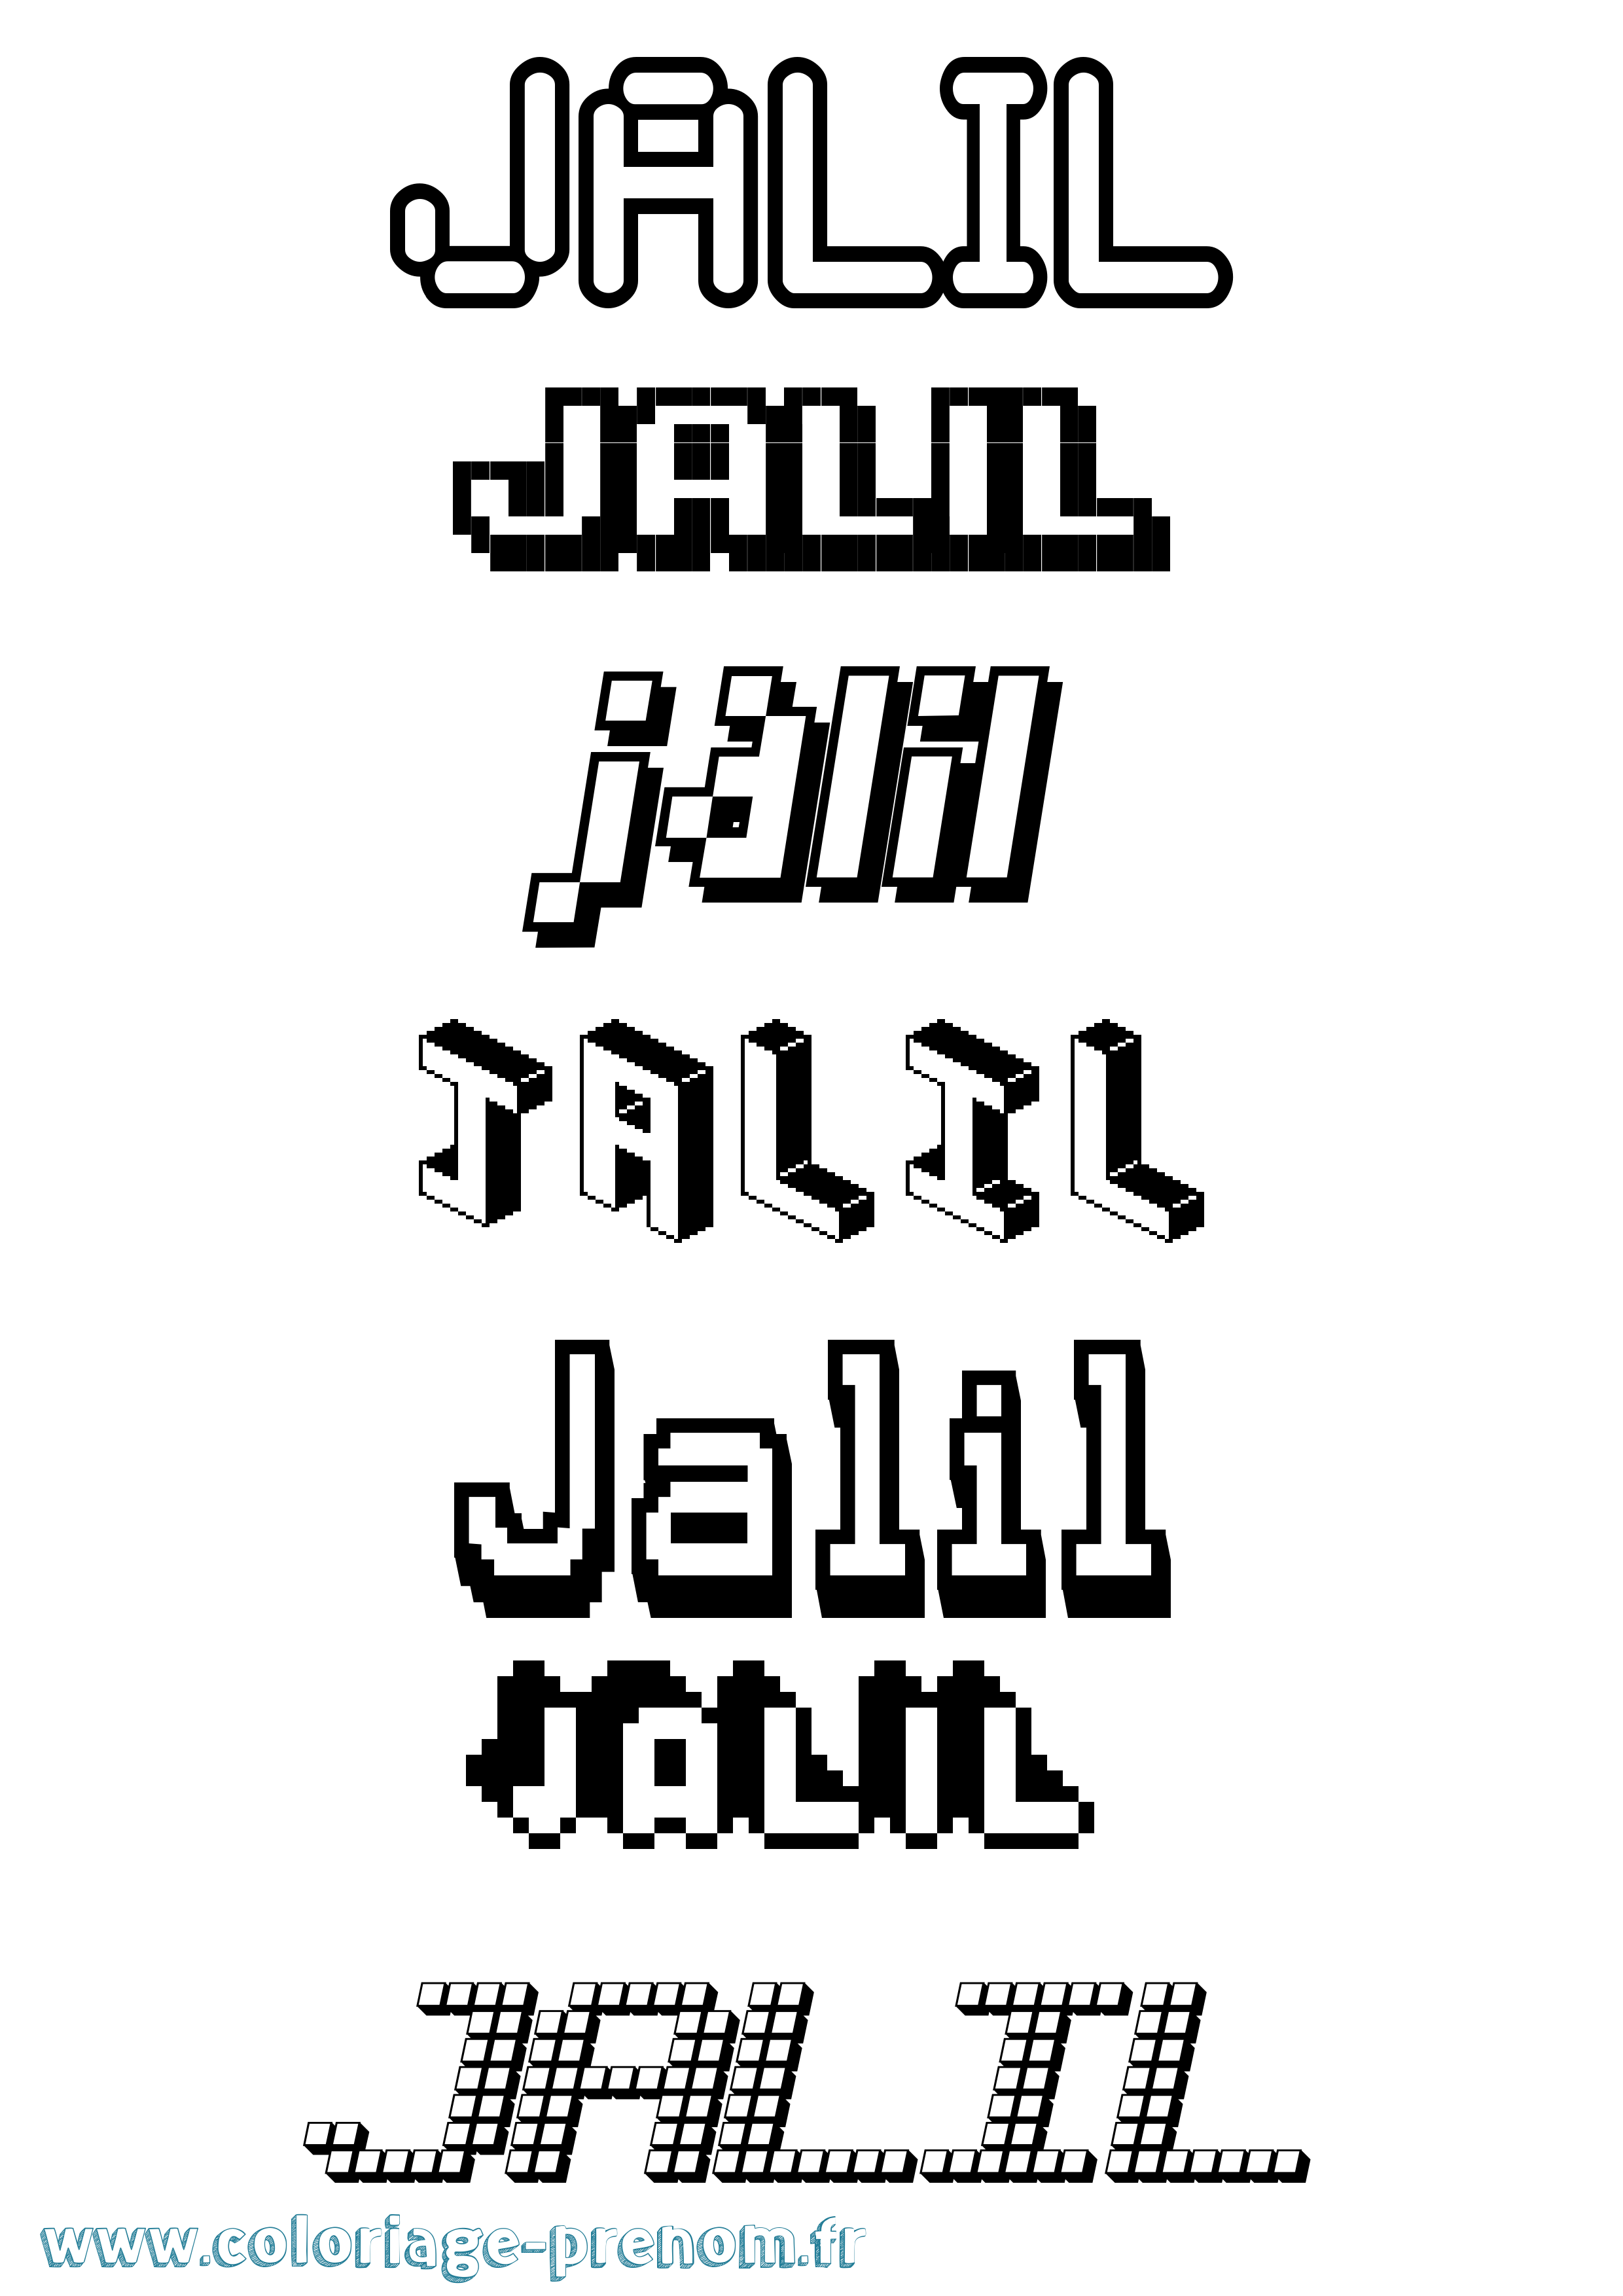 Coloriage prénom Jalil